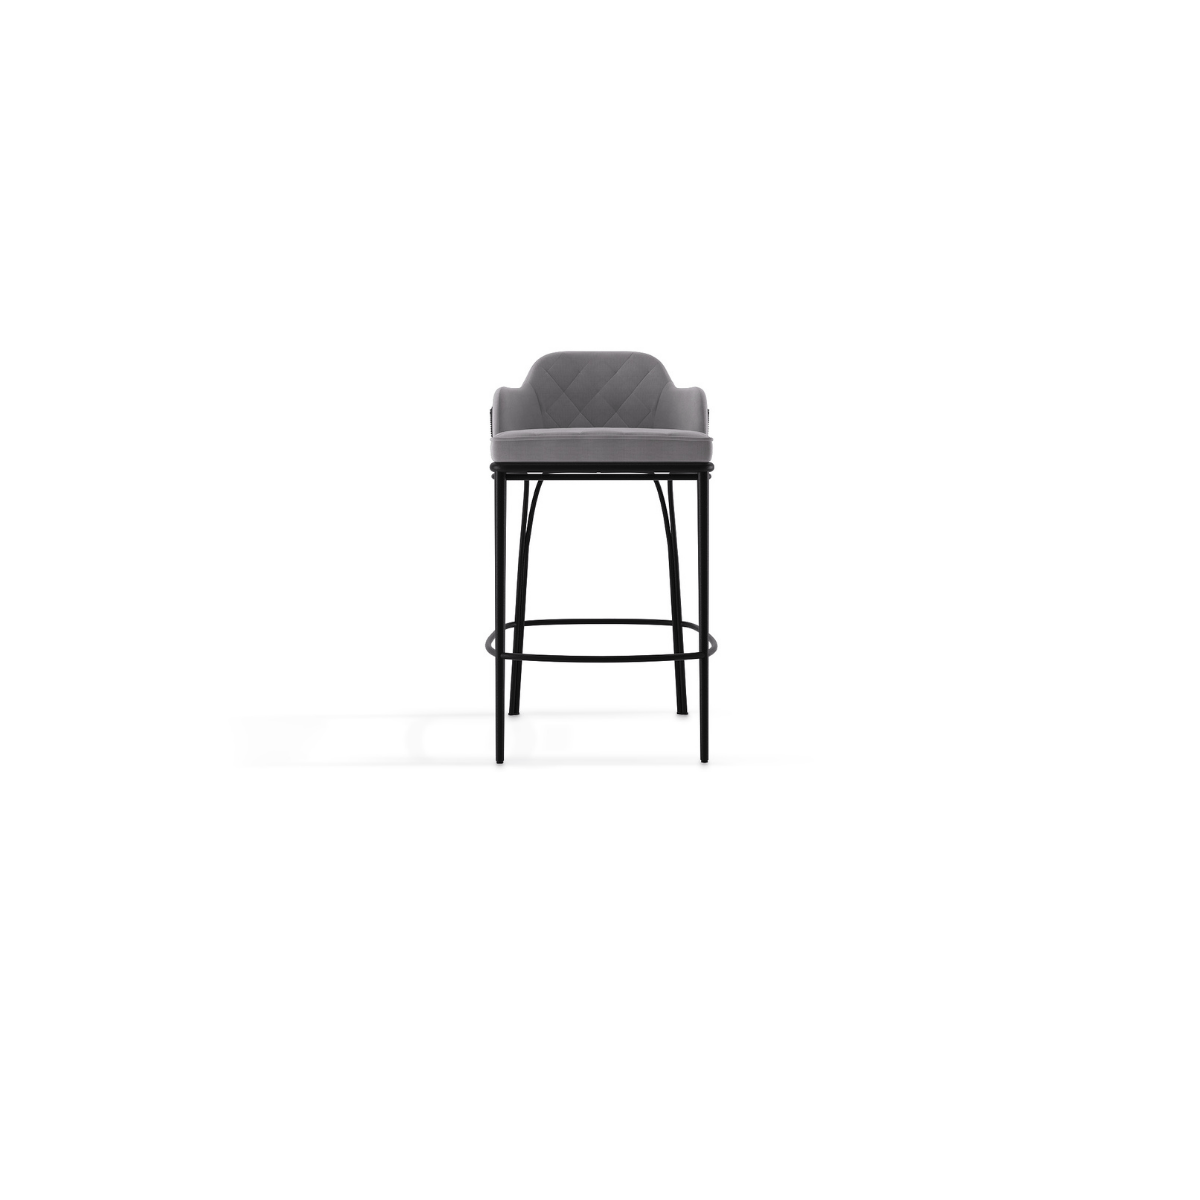 luxxu outdoor charla grey bar chair 01 LUXXU